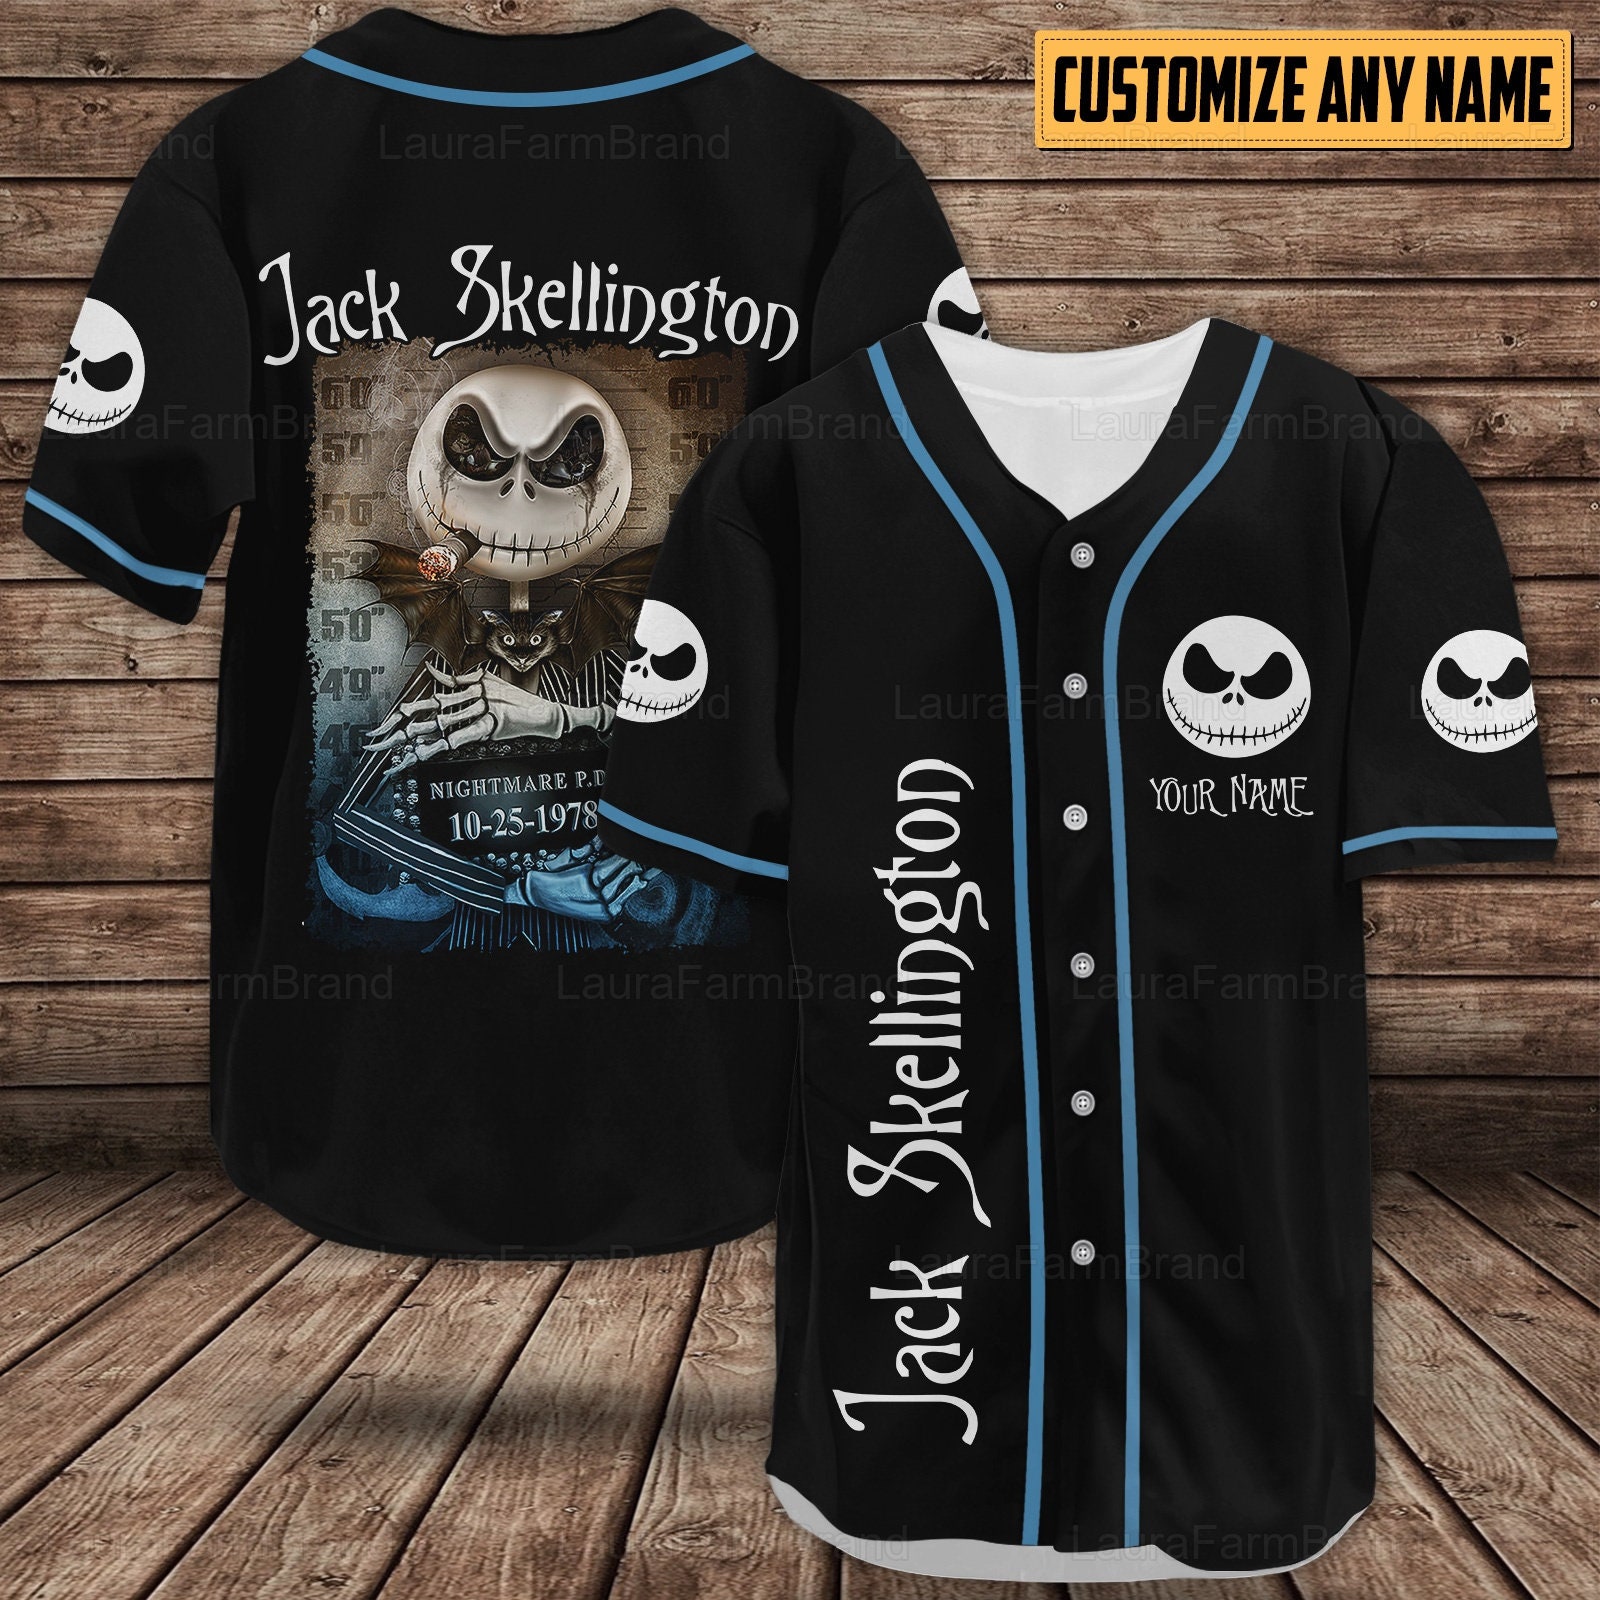 Discover Personalized Jack Skellington Baseball Shirt, Jack Skellington Shirt